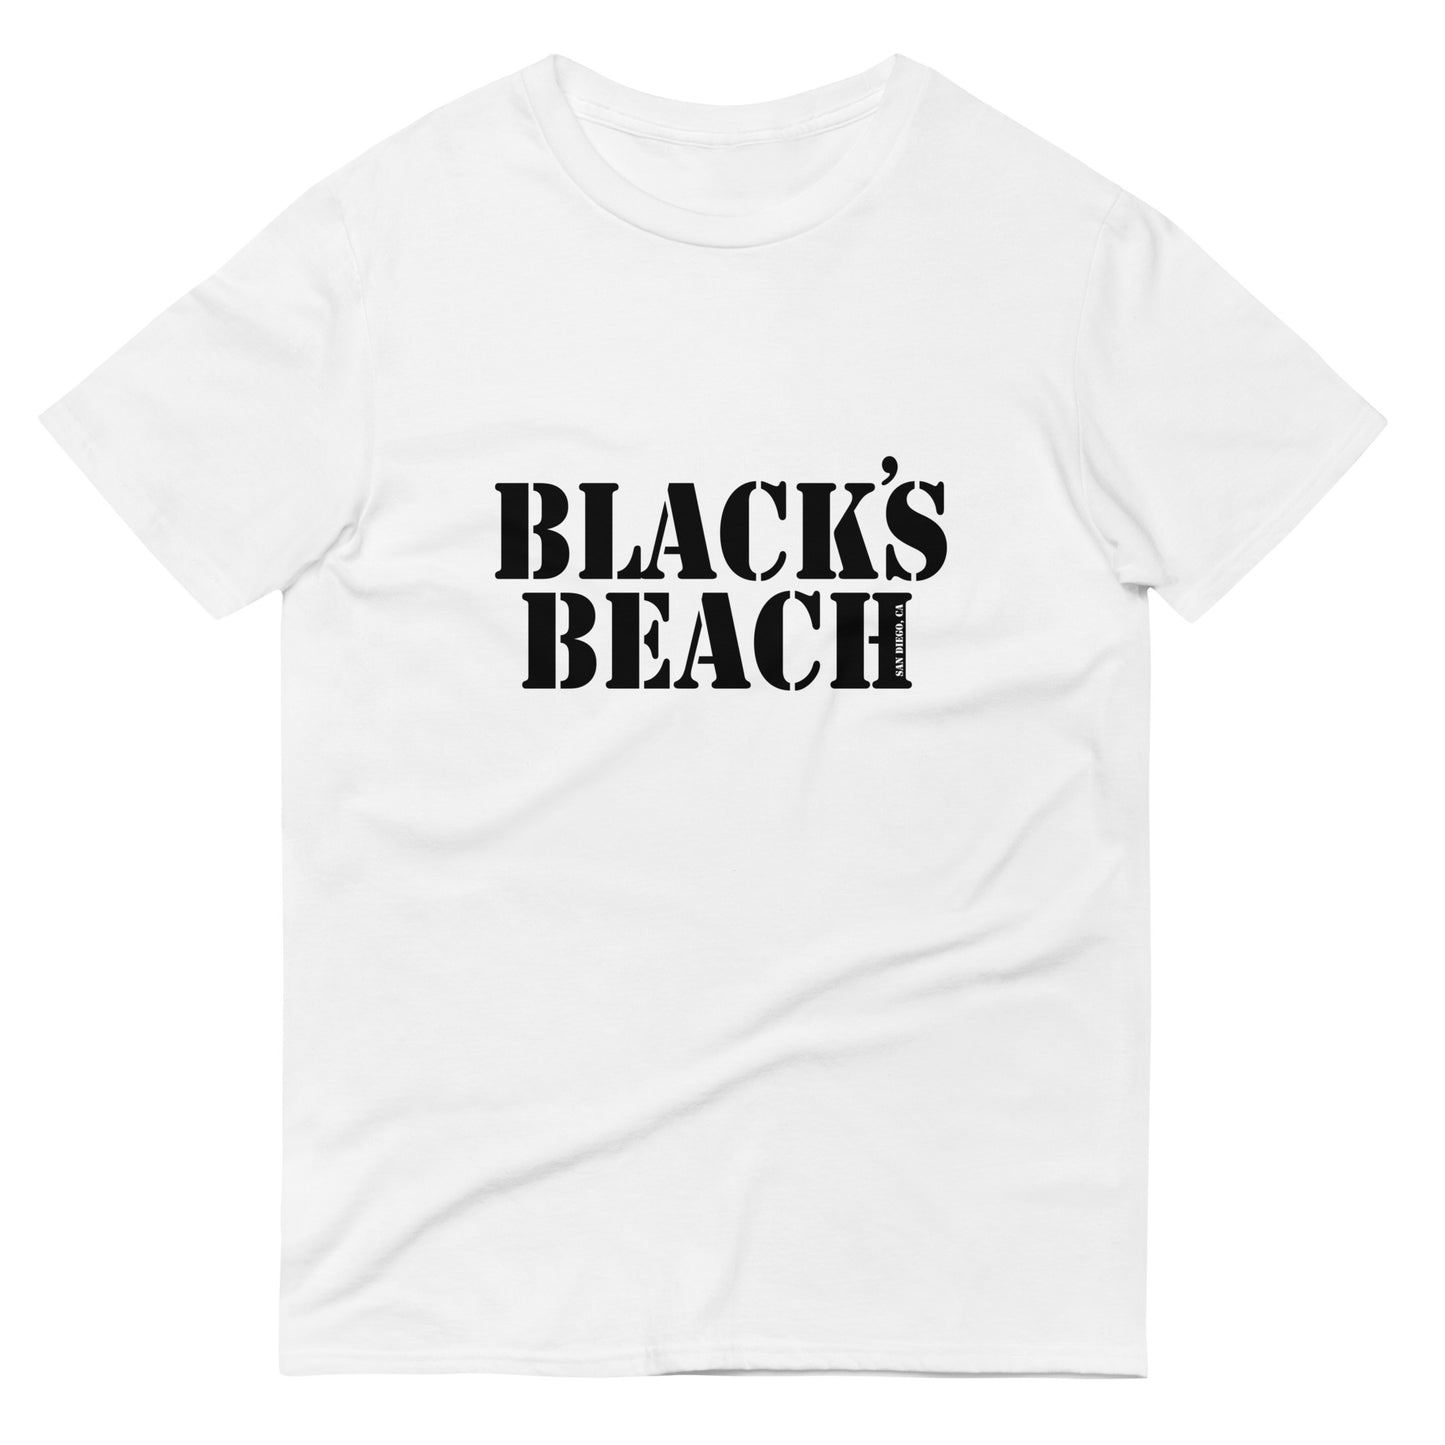 Black's Beach Tees / Style 05 / Short-Sleeve T-Shirt